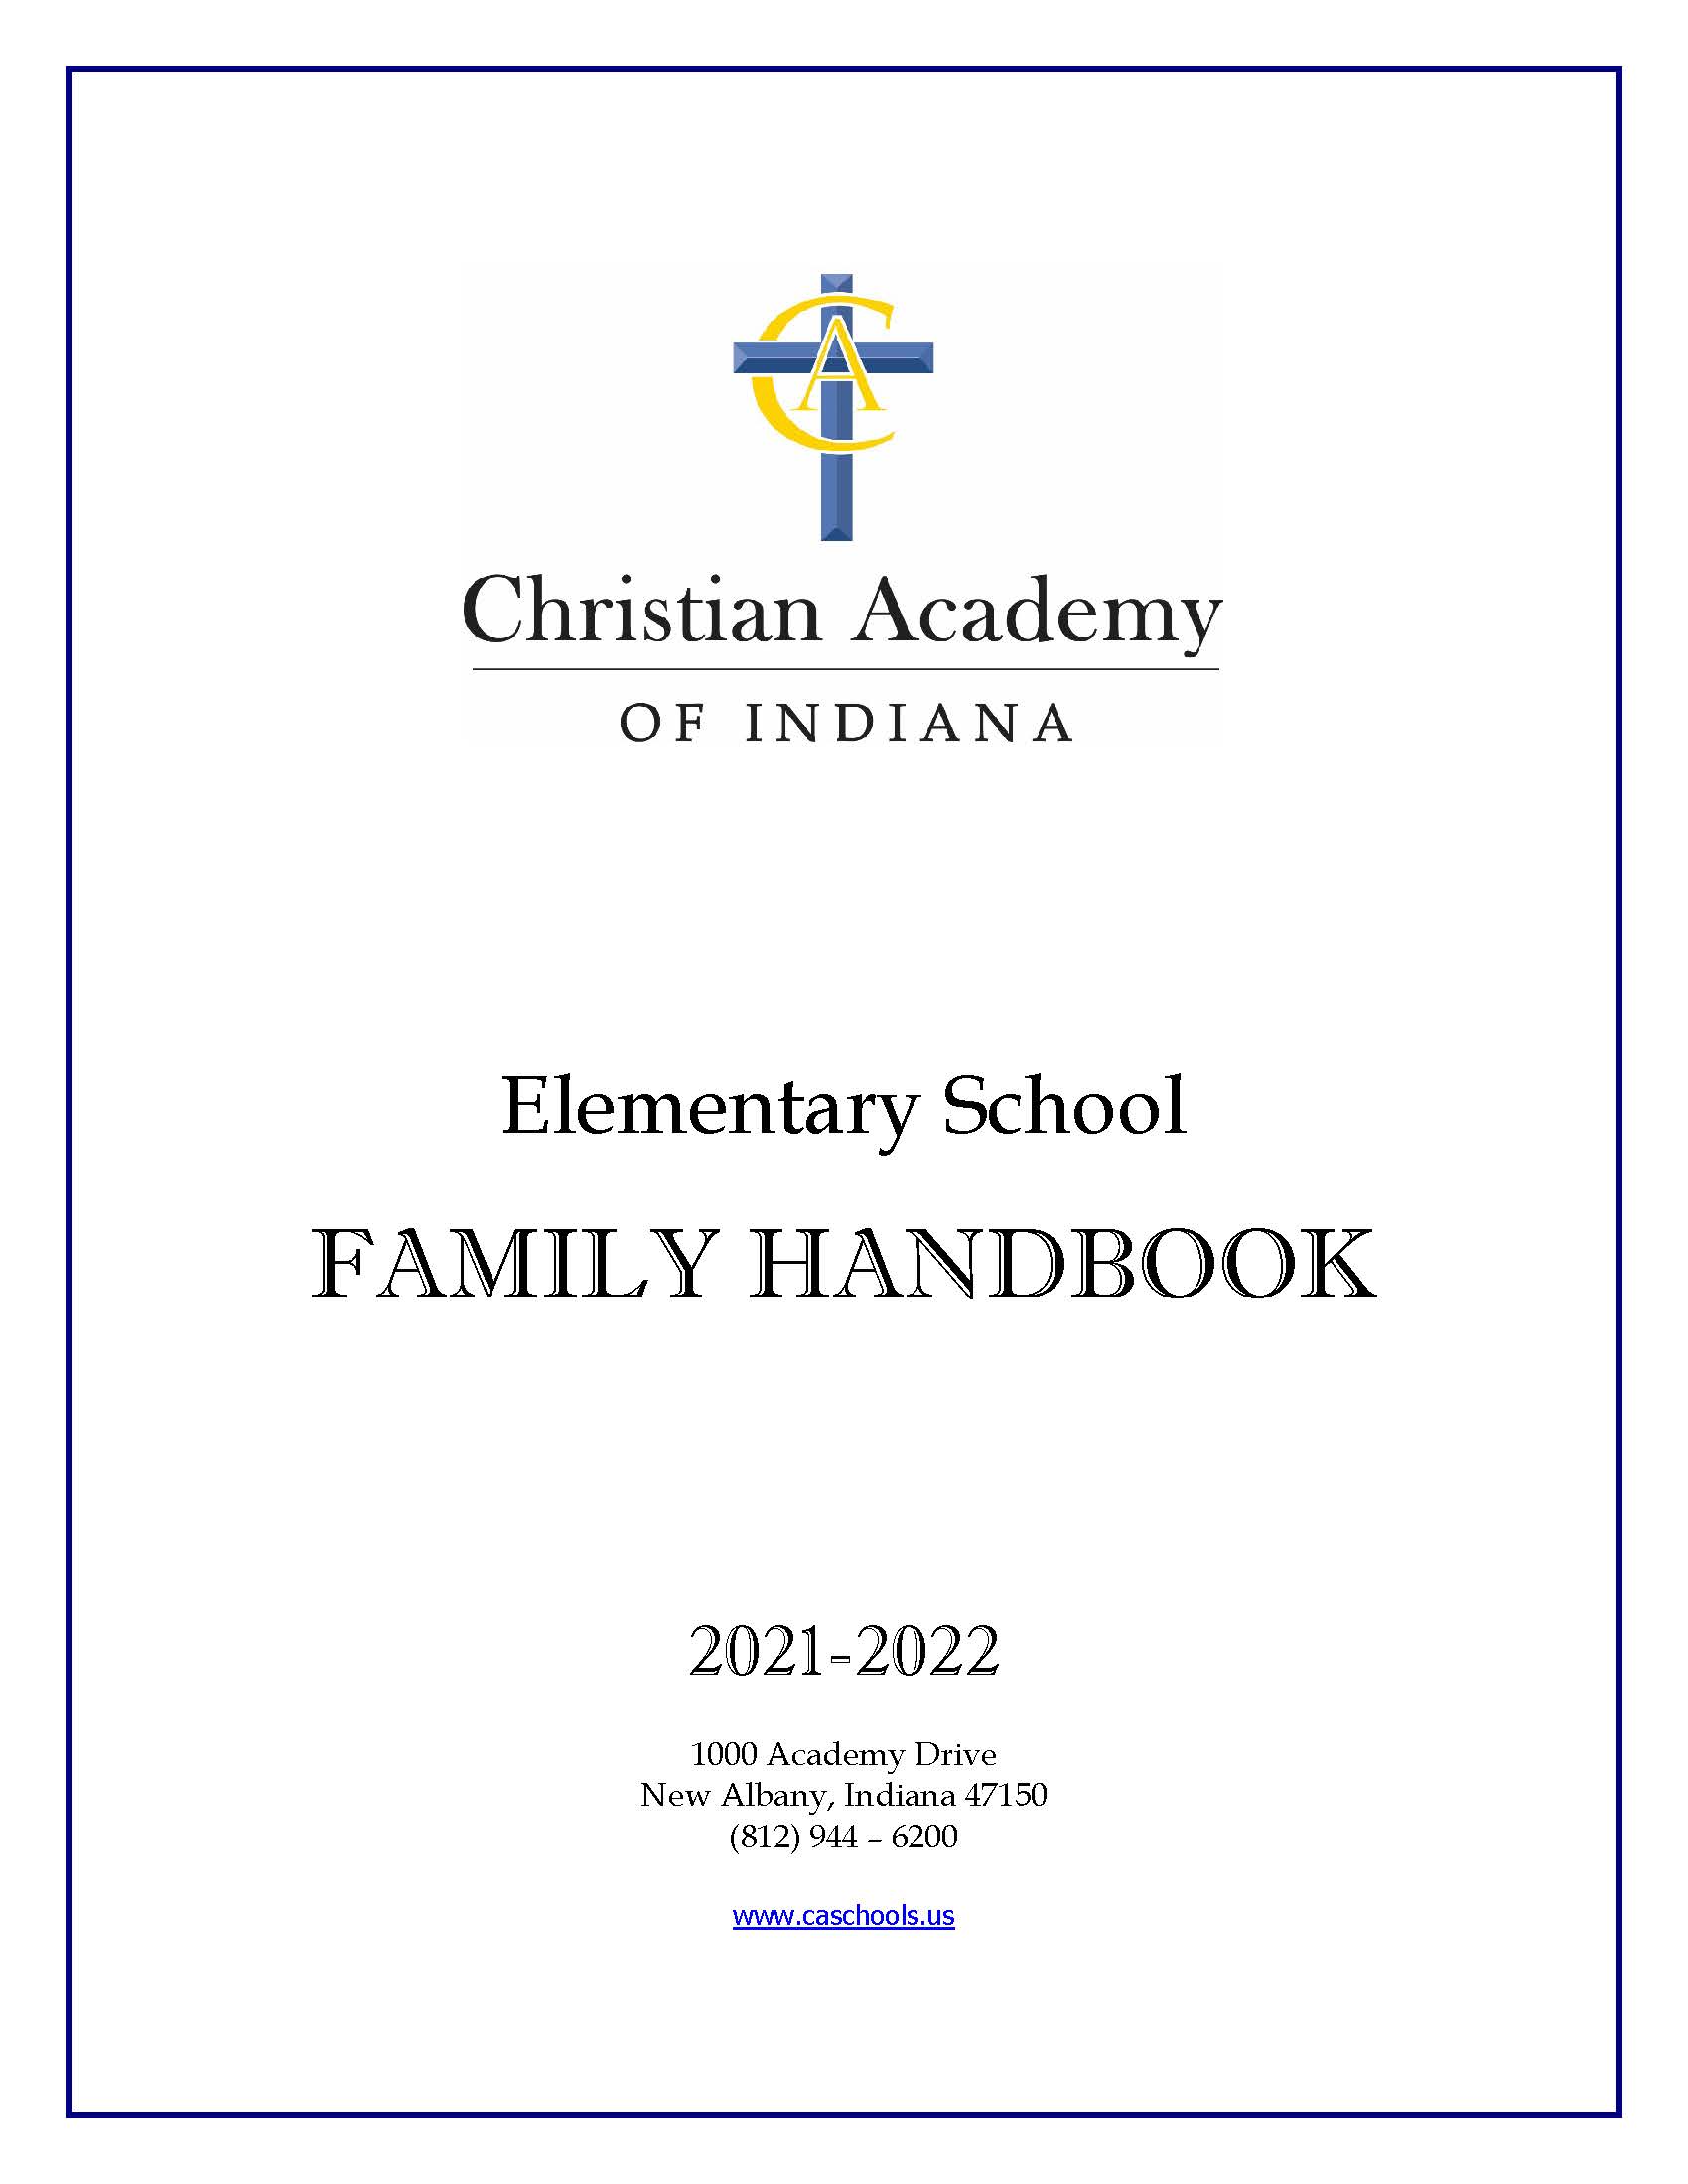 Christian Academy School System | Christian Academy of Indiana Elementary | 2021-2022 Family Handbook